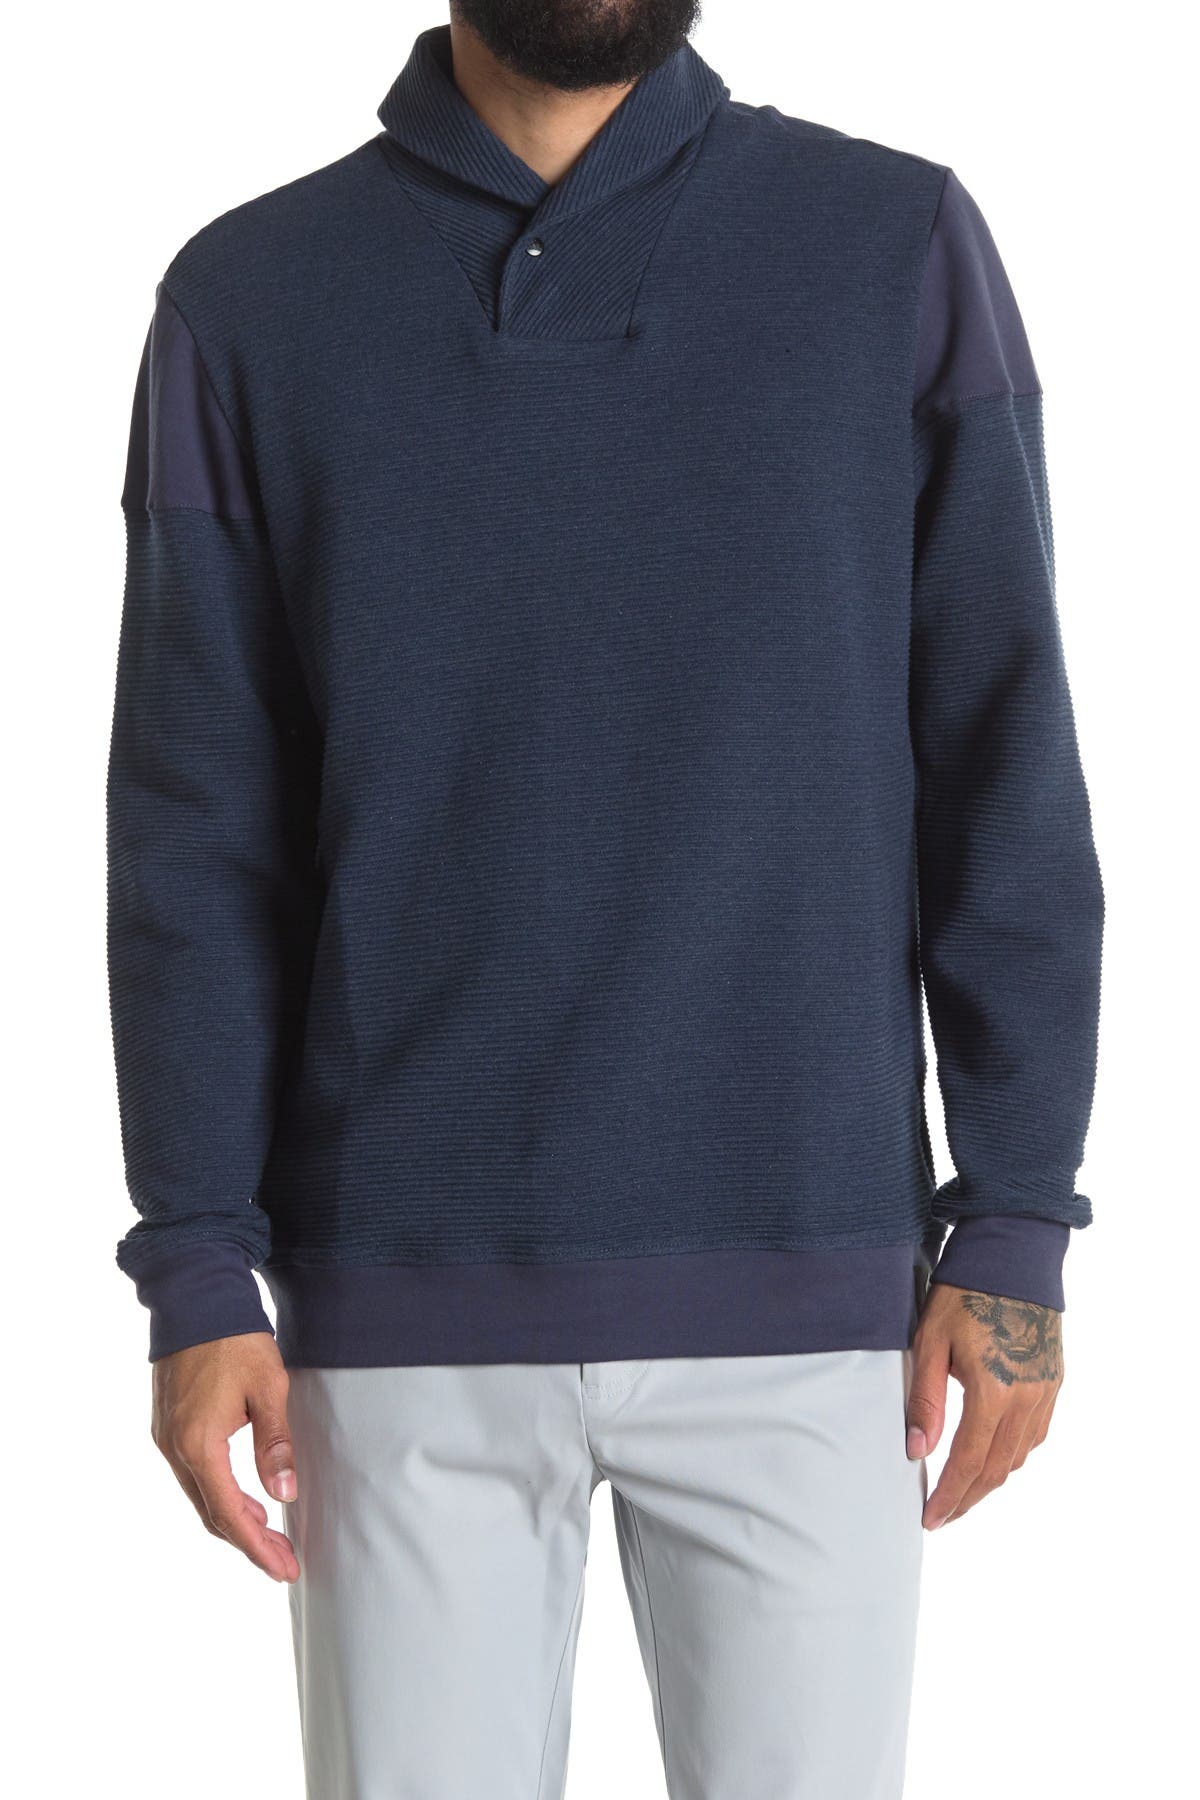 Adidas Golf Adicross Captain Sweater In Medium Grey